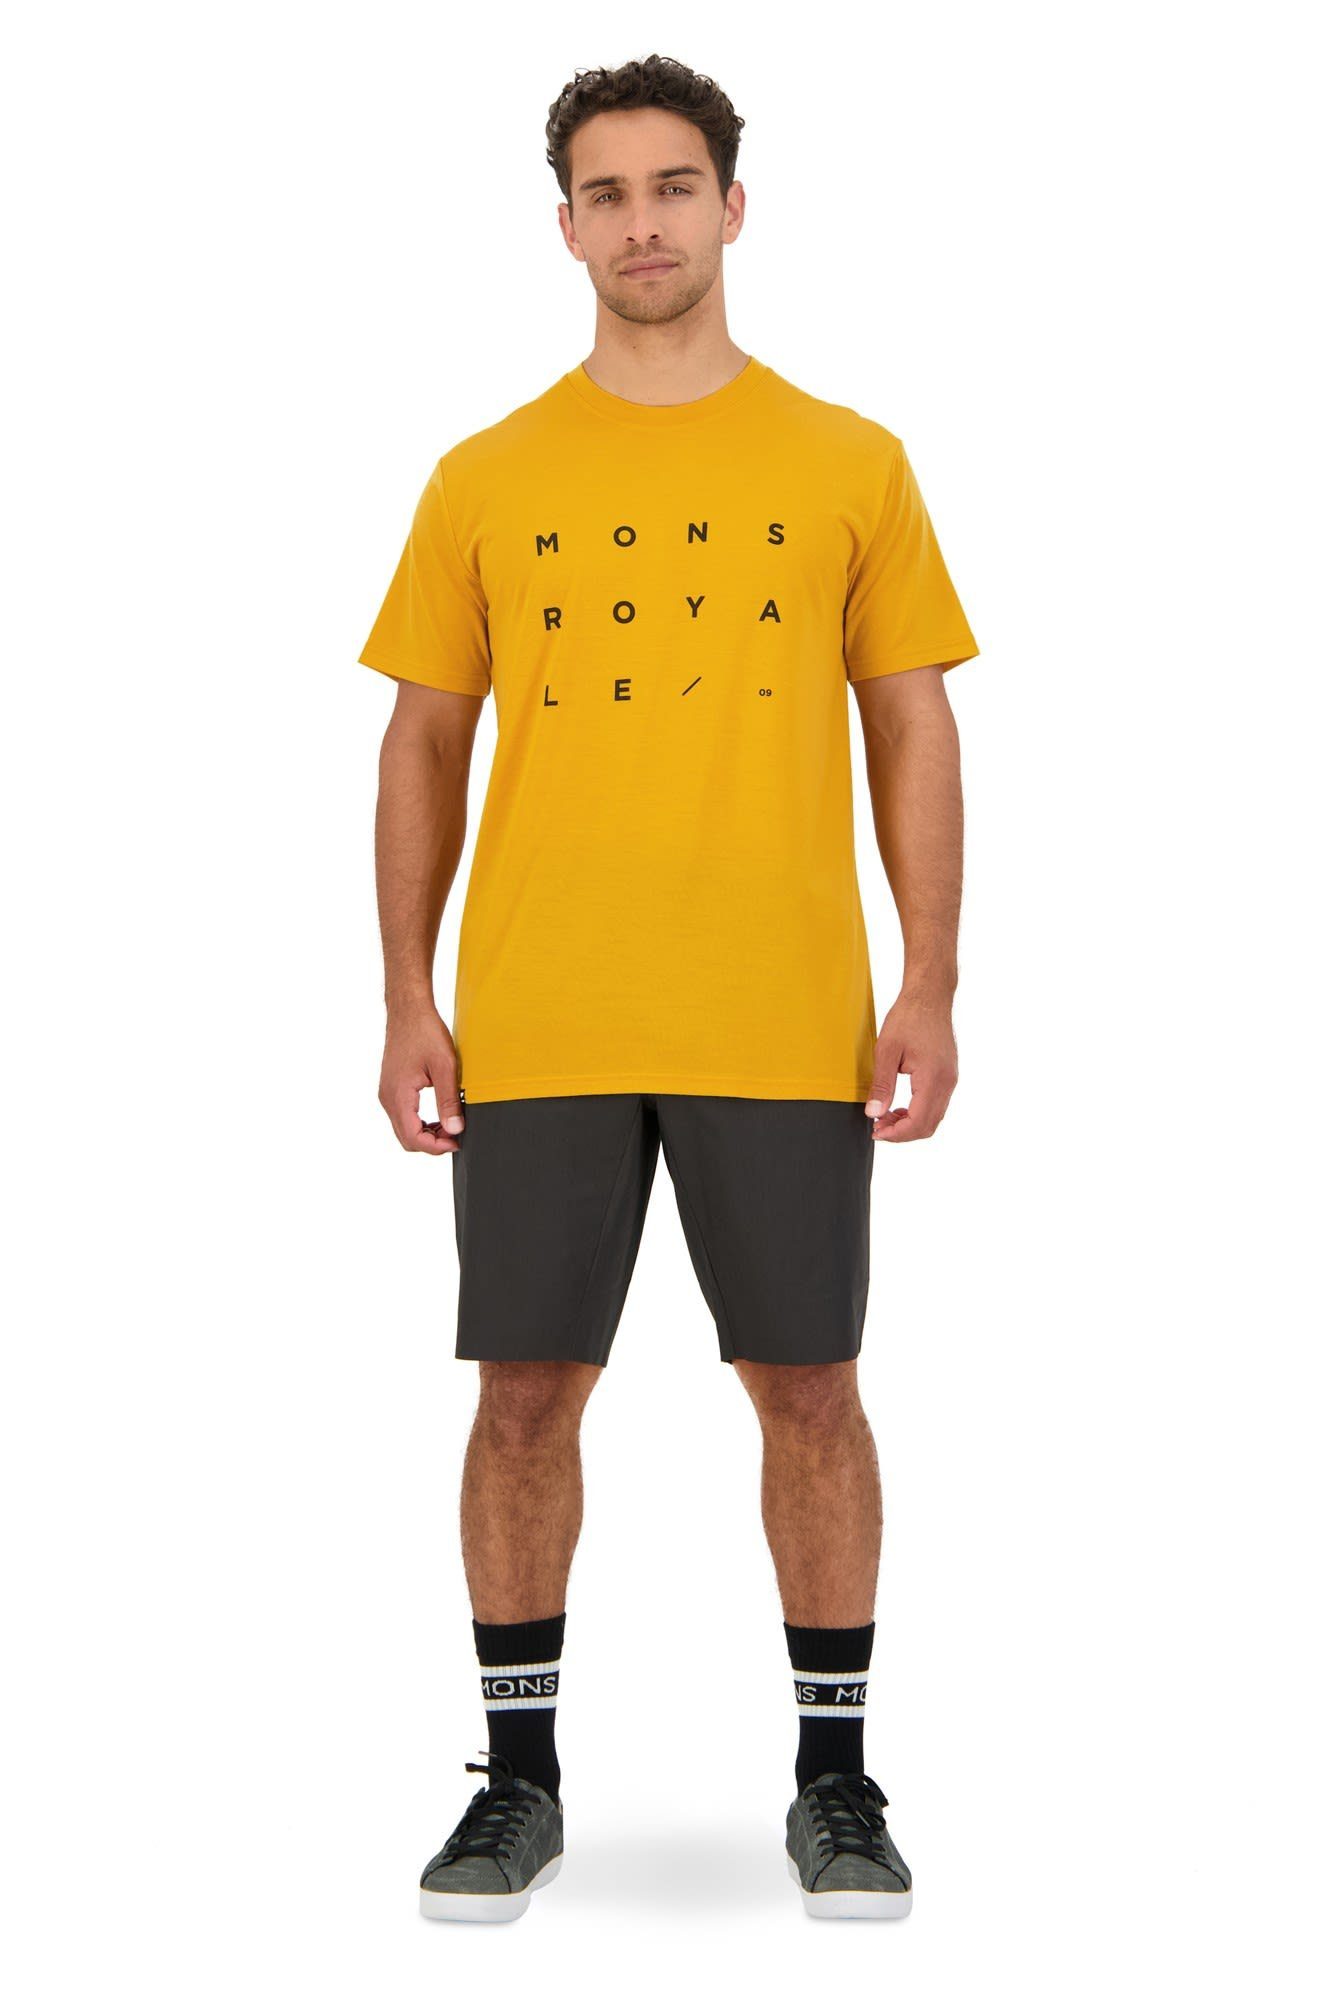 Royale Grid Royale T-Shirt Mons M T-shirt Herren Gold Mons Kurzarm-Shirt Icon Mons -